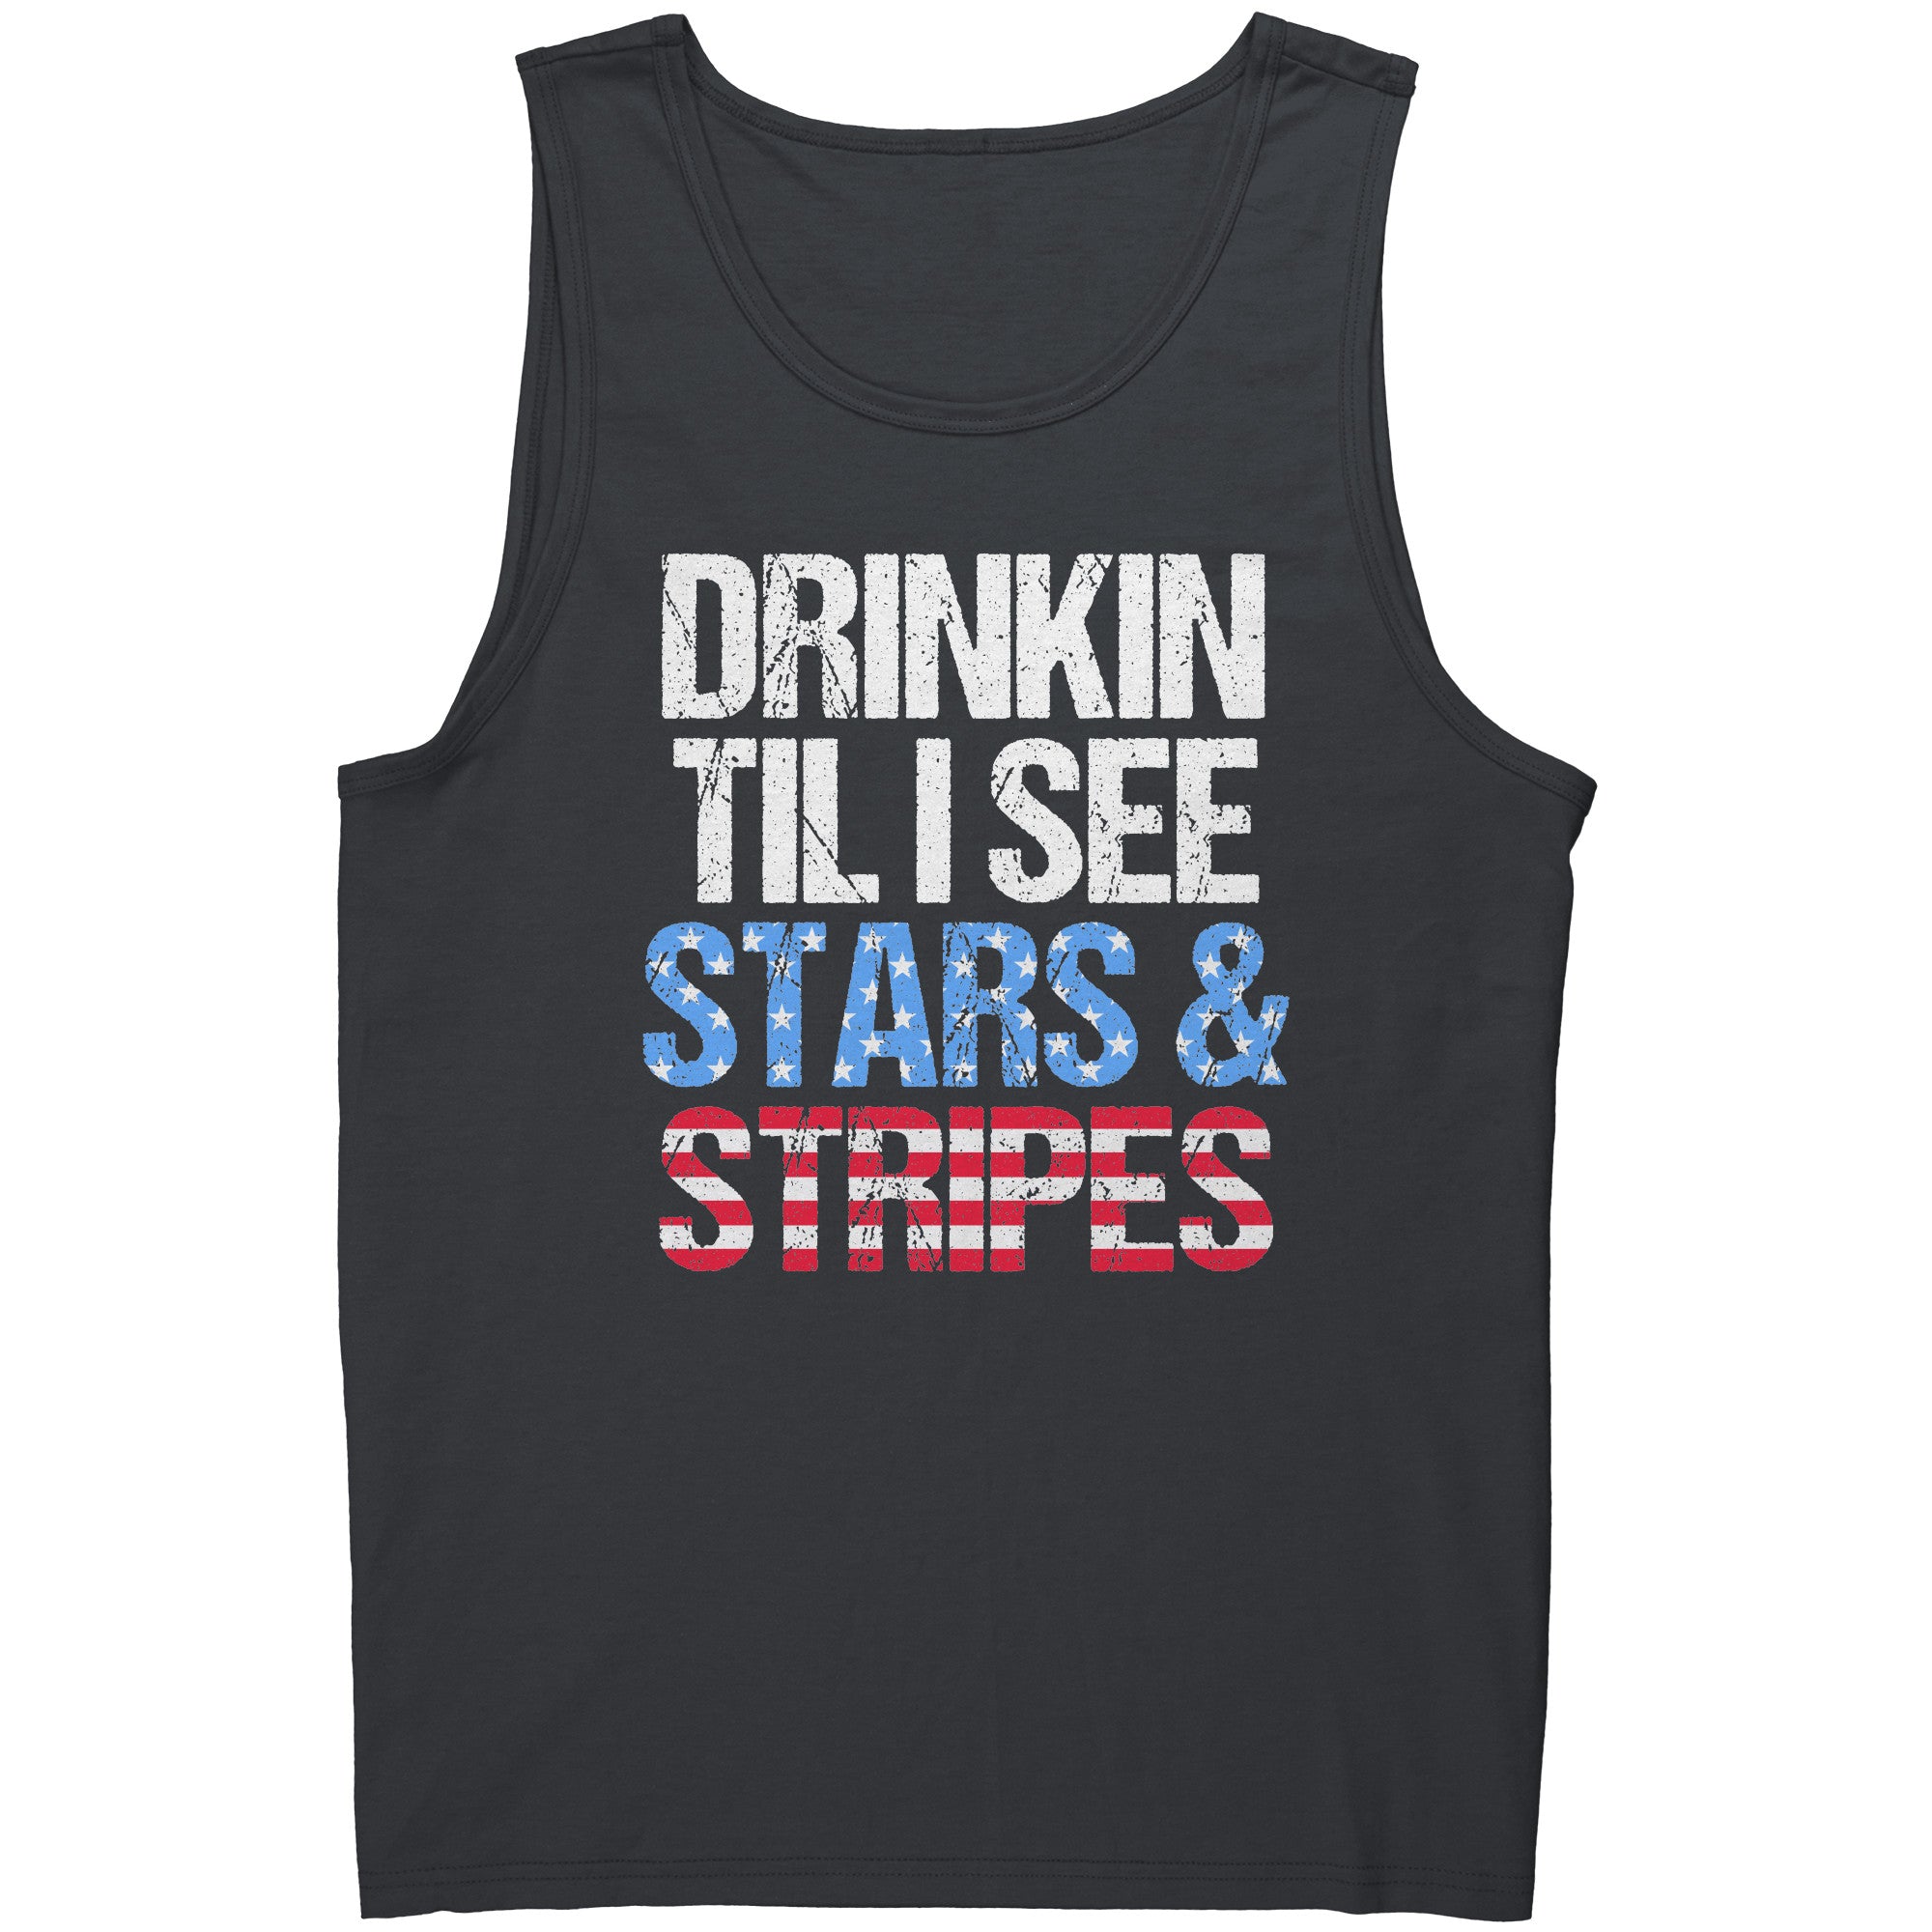 Drinking Til I See Stars & Stripes -Apparel | Drunk America 